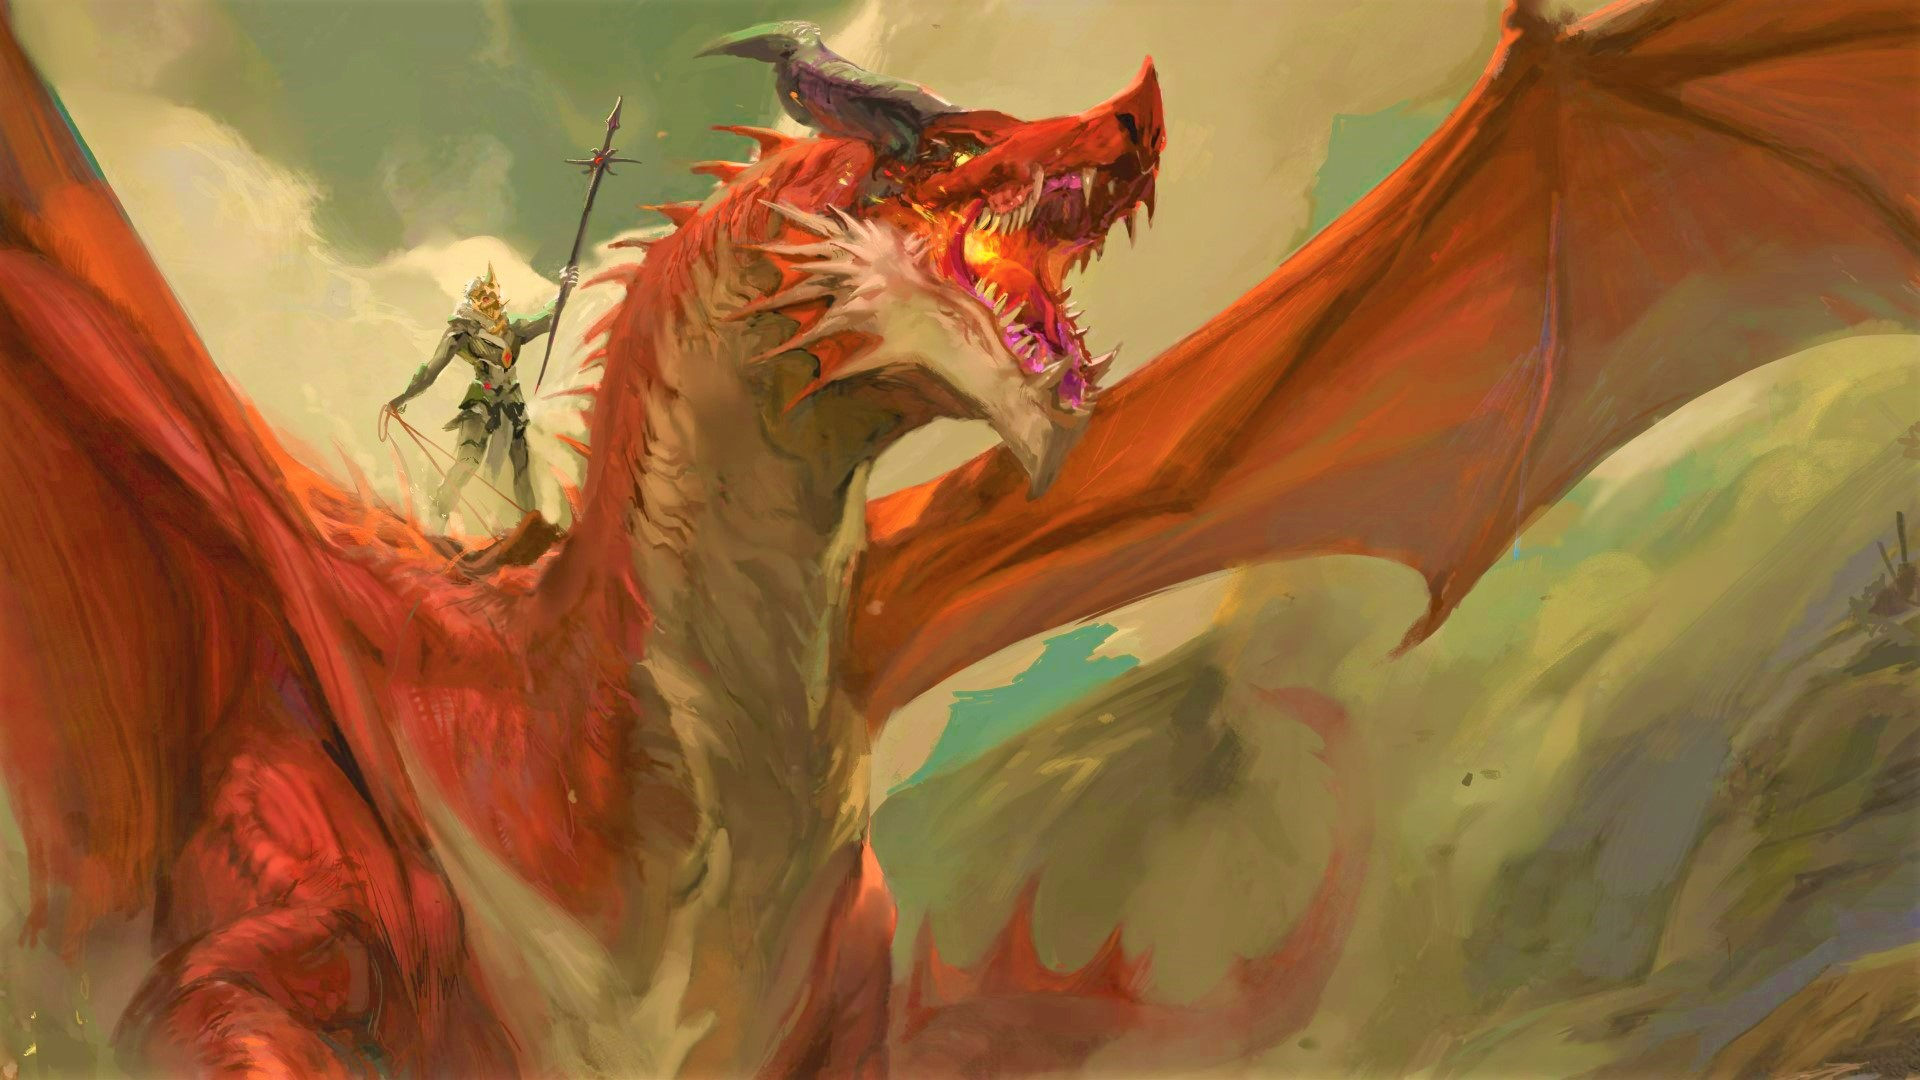 Dragonlance  Dungeons & Dragons